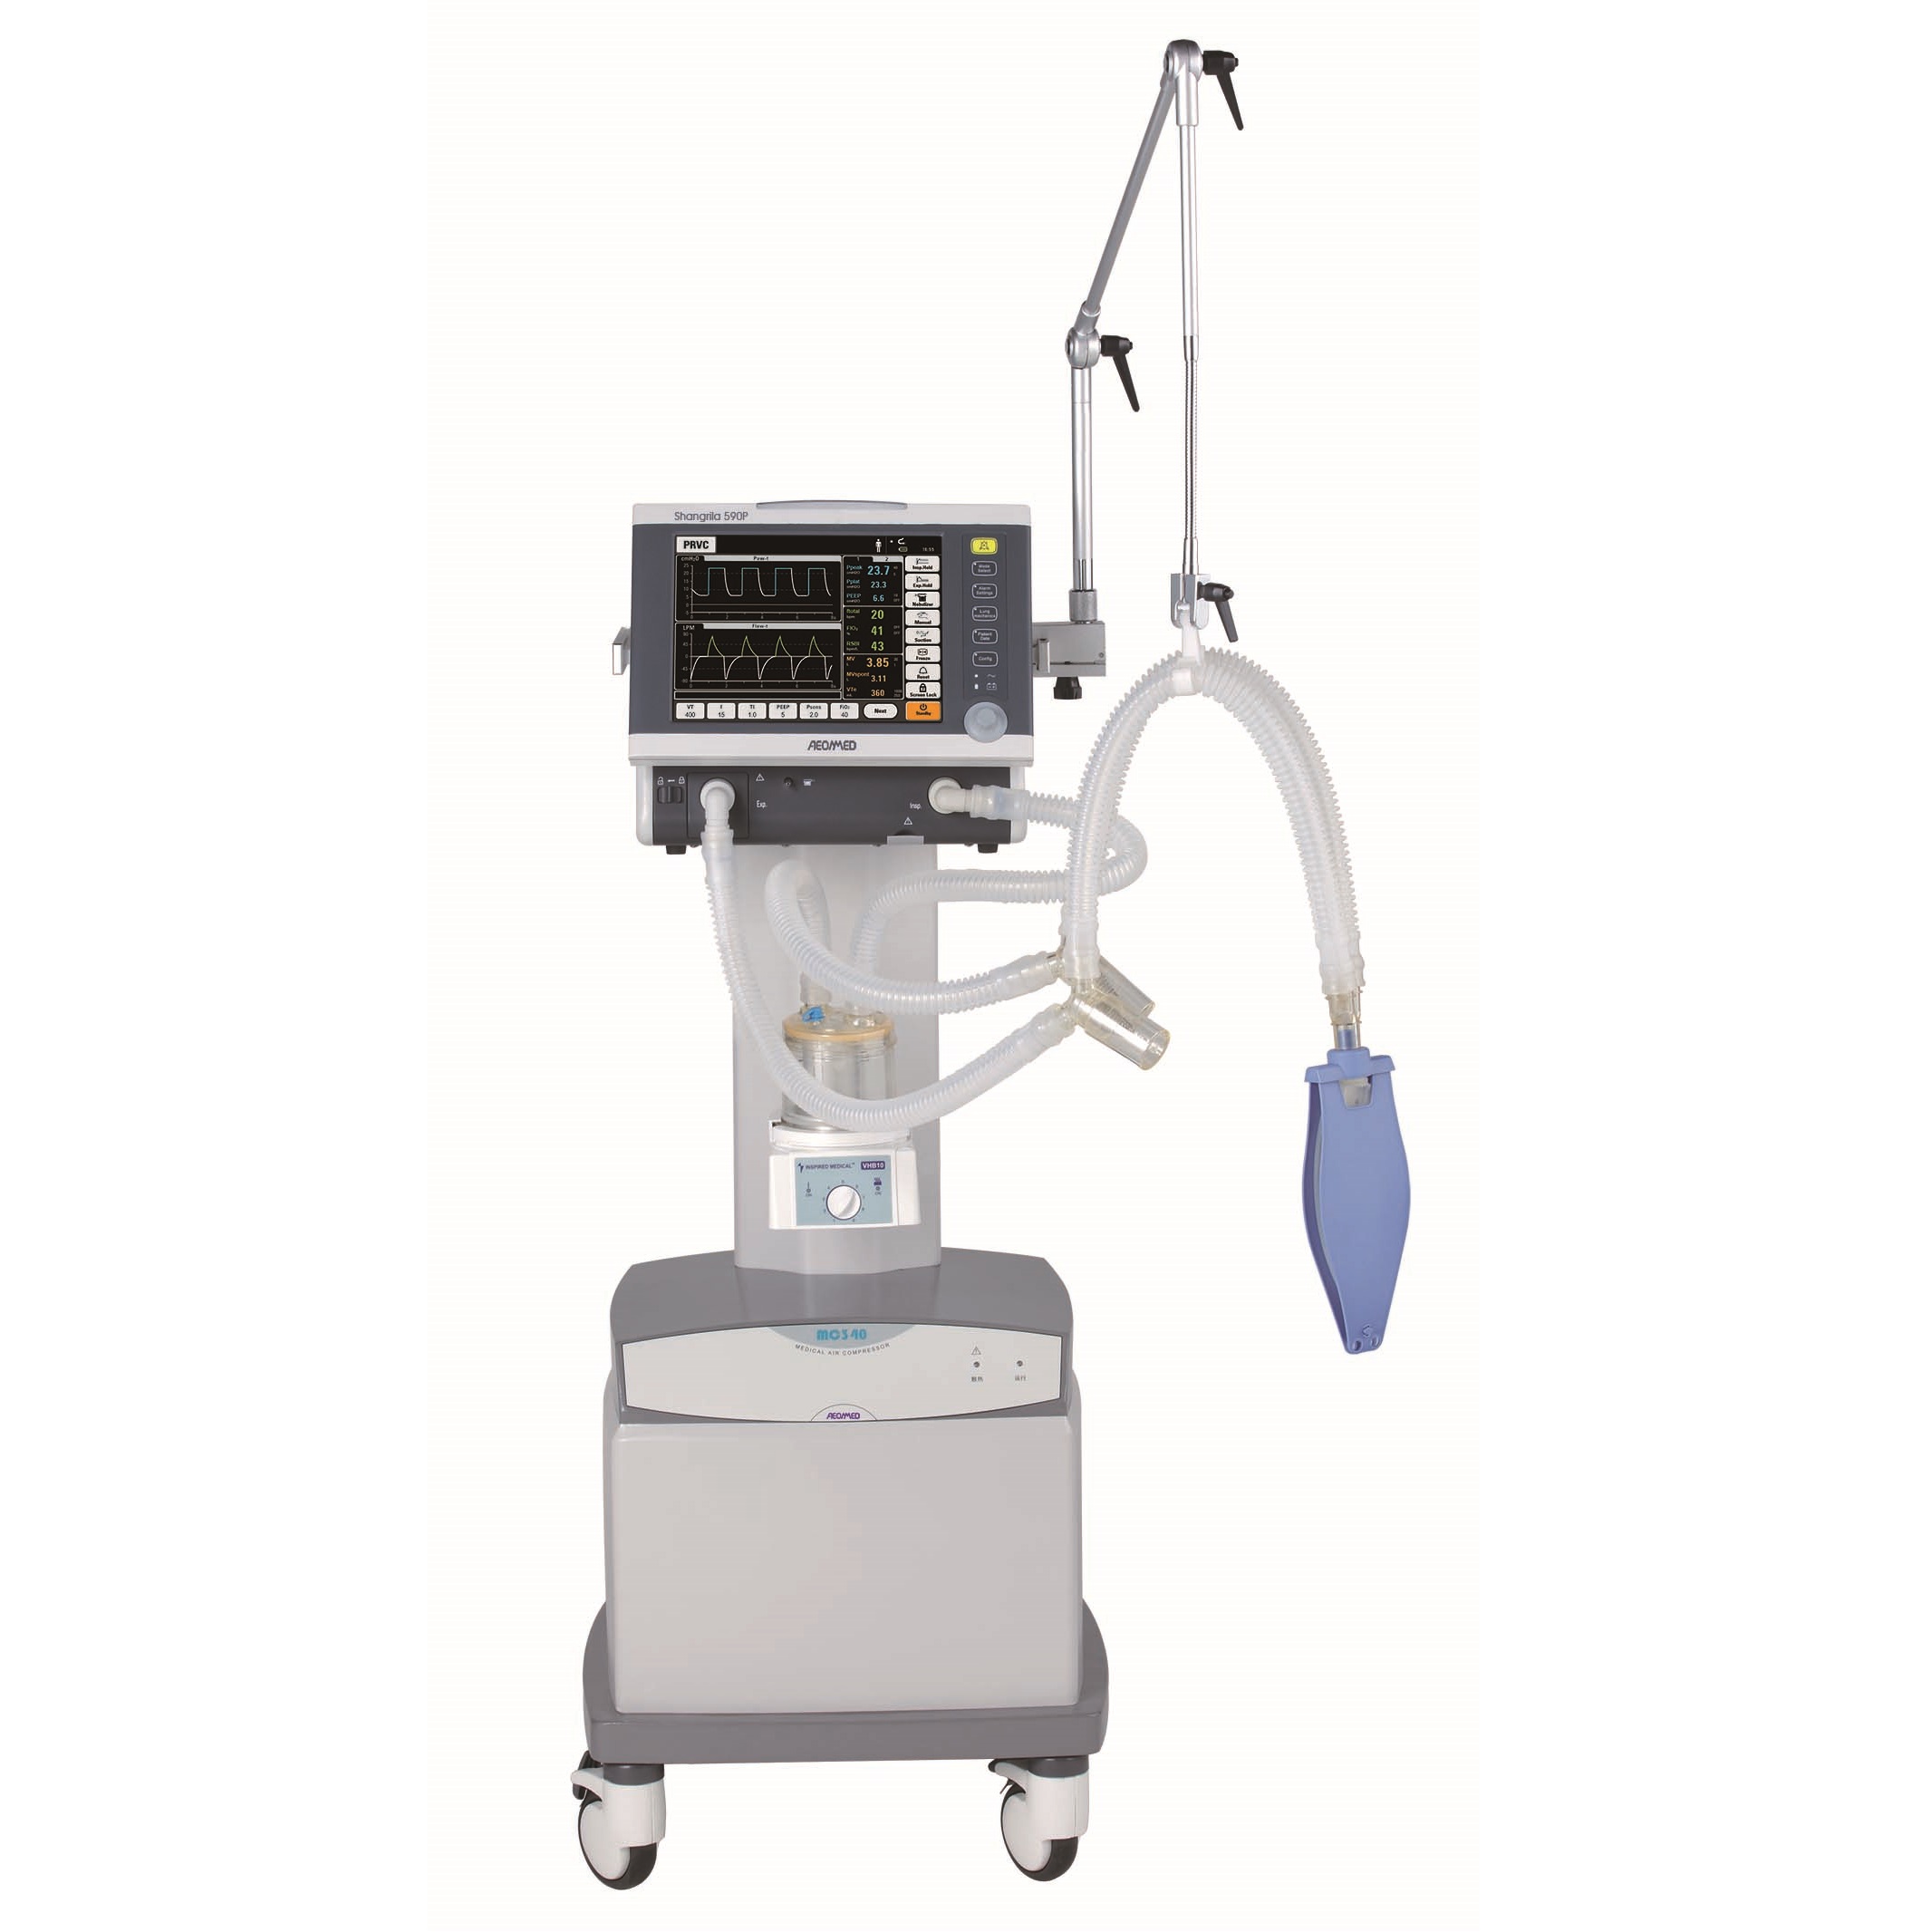 590p ICU Hospital Ventilation Breathing Medical Product Hospital Equipment for Emergency